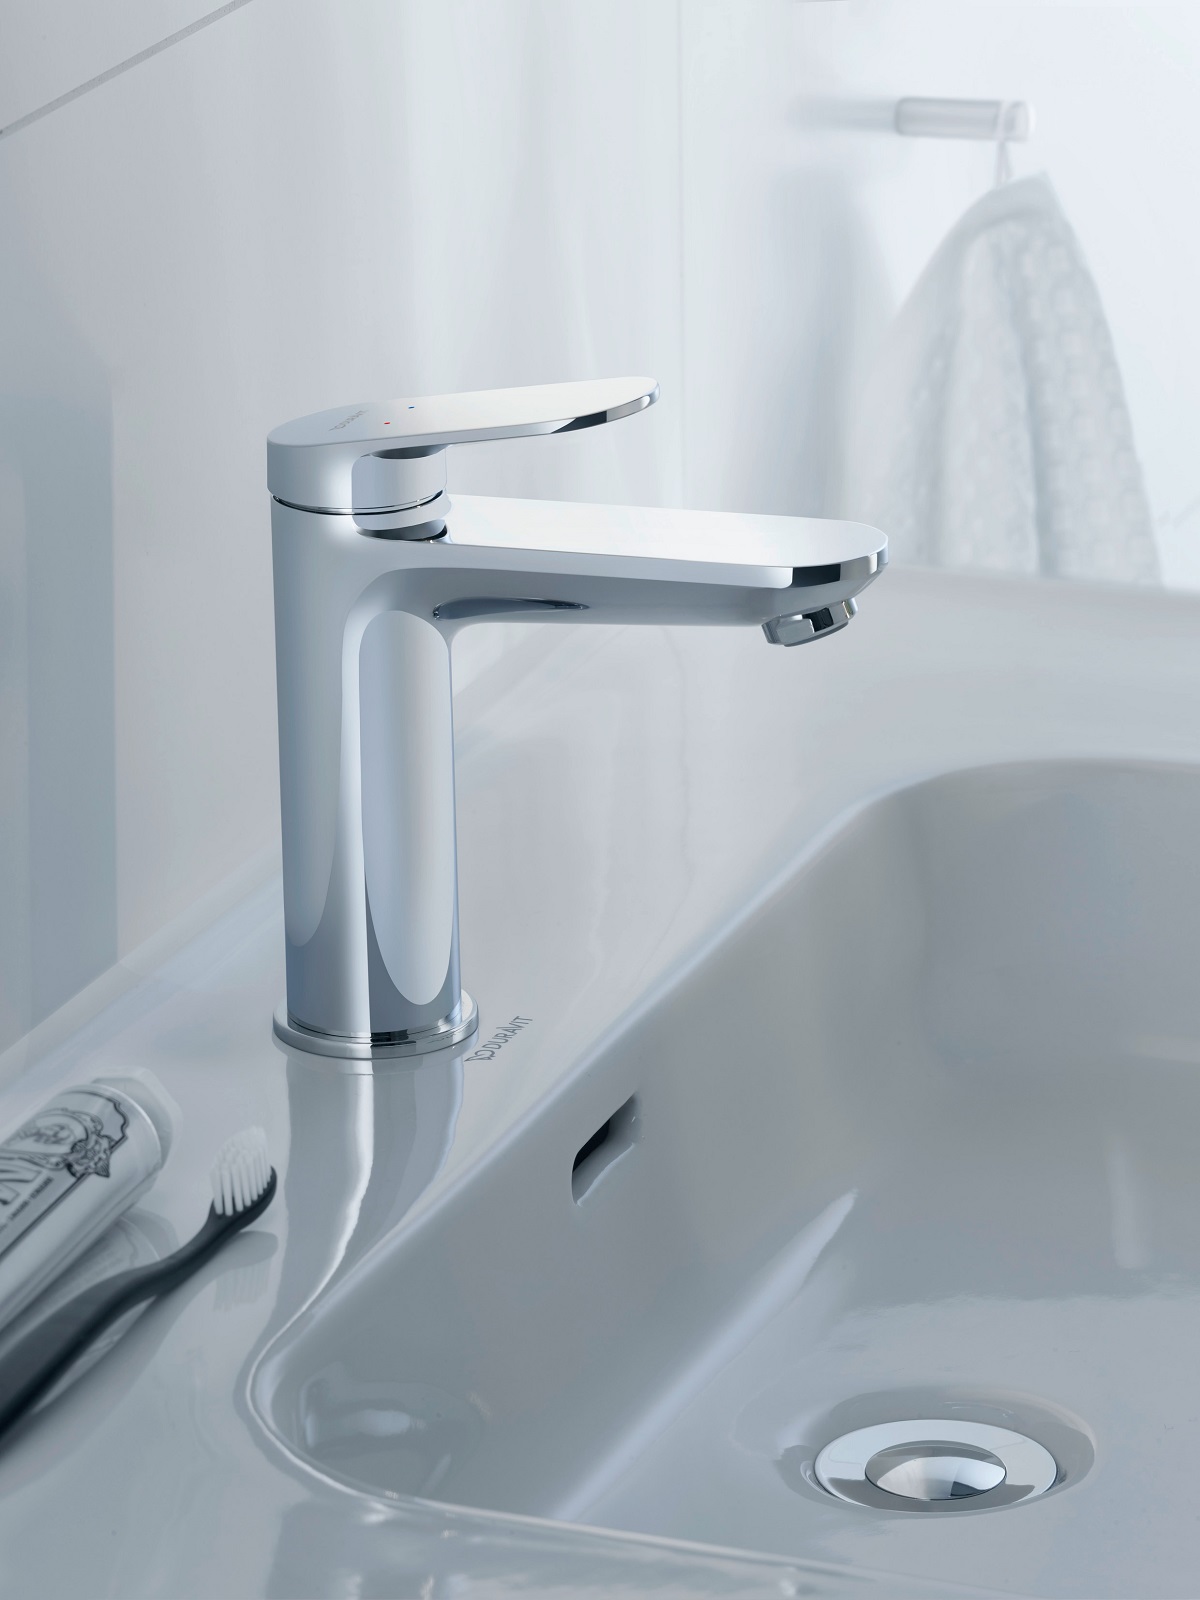 Chrome tap on white basin in Duravit Wave design